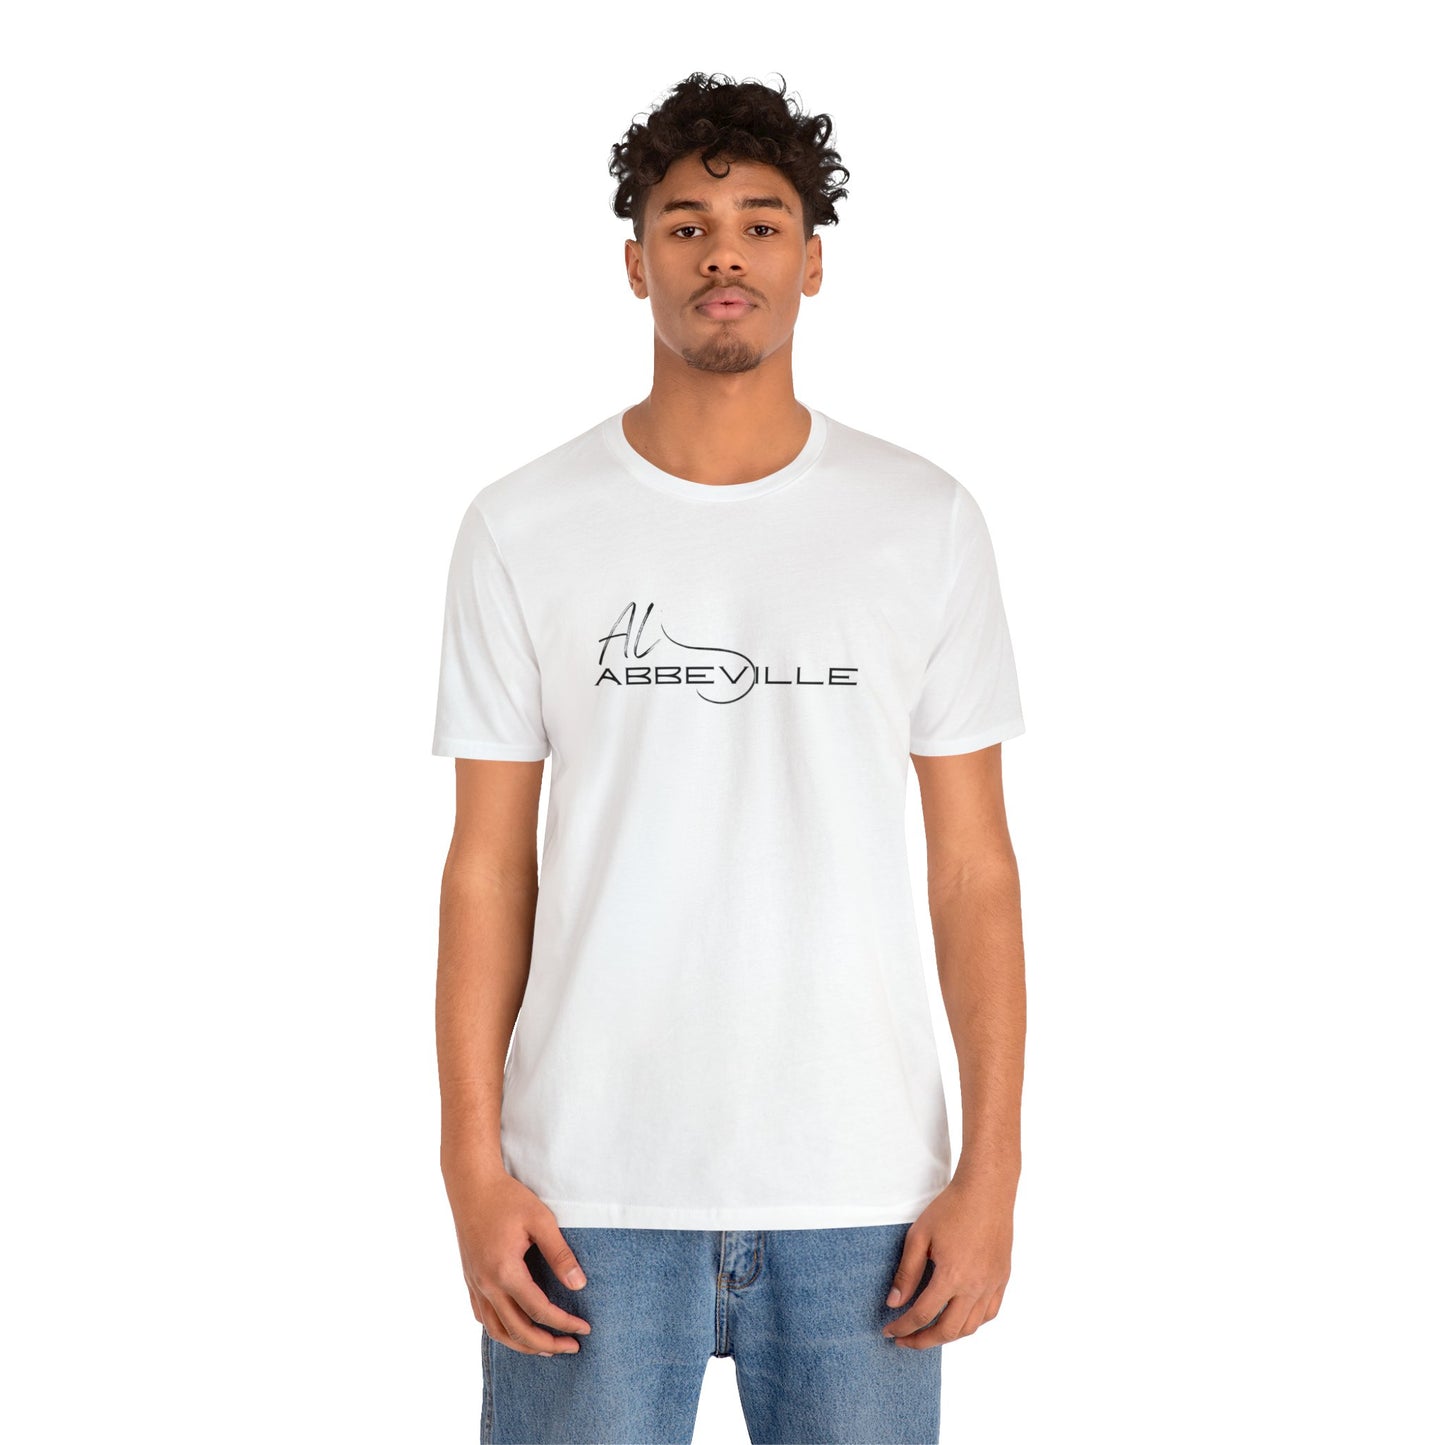 Abbeville, AL Unisex T-shirt Swirl